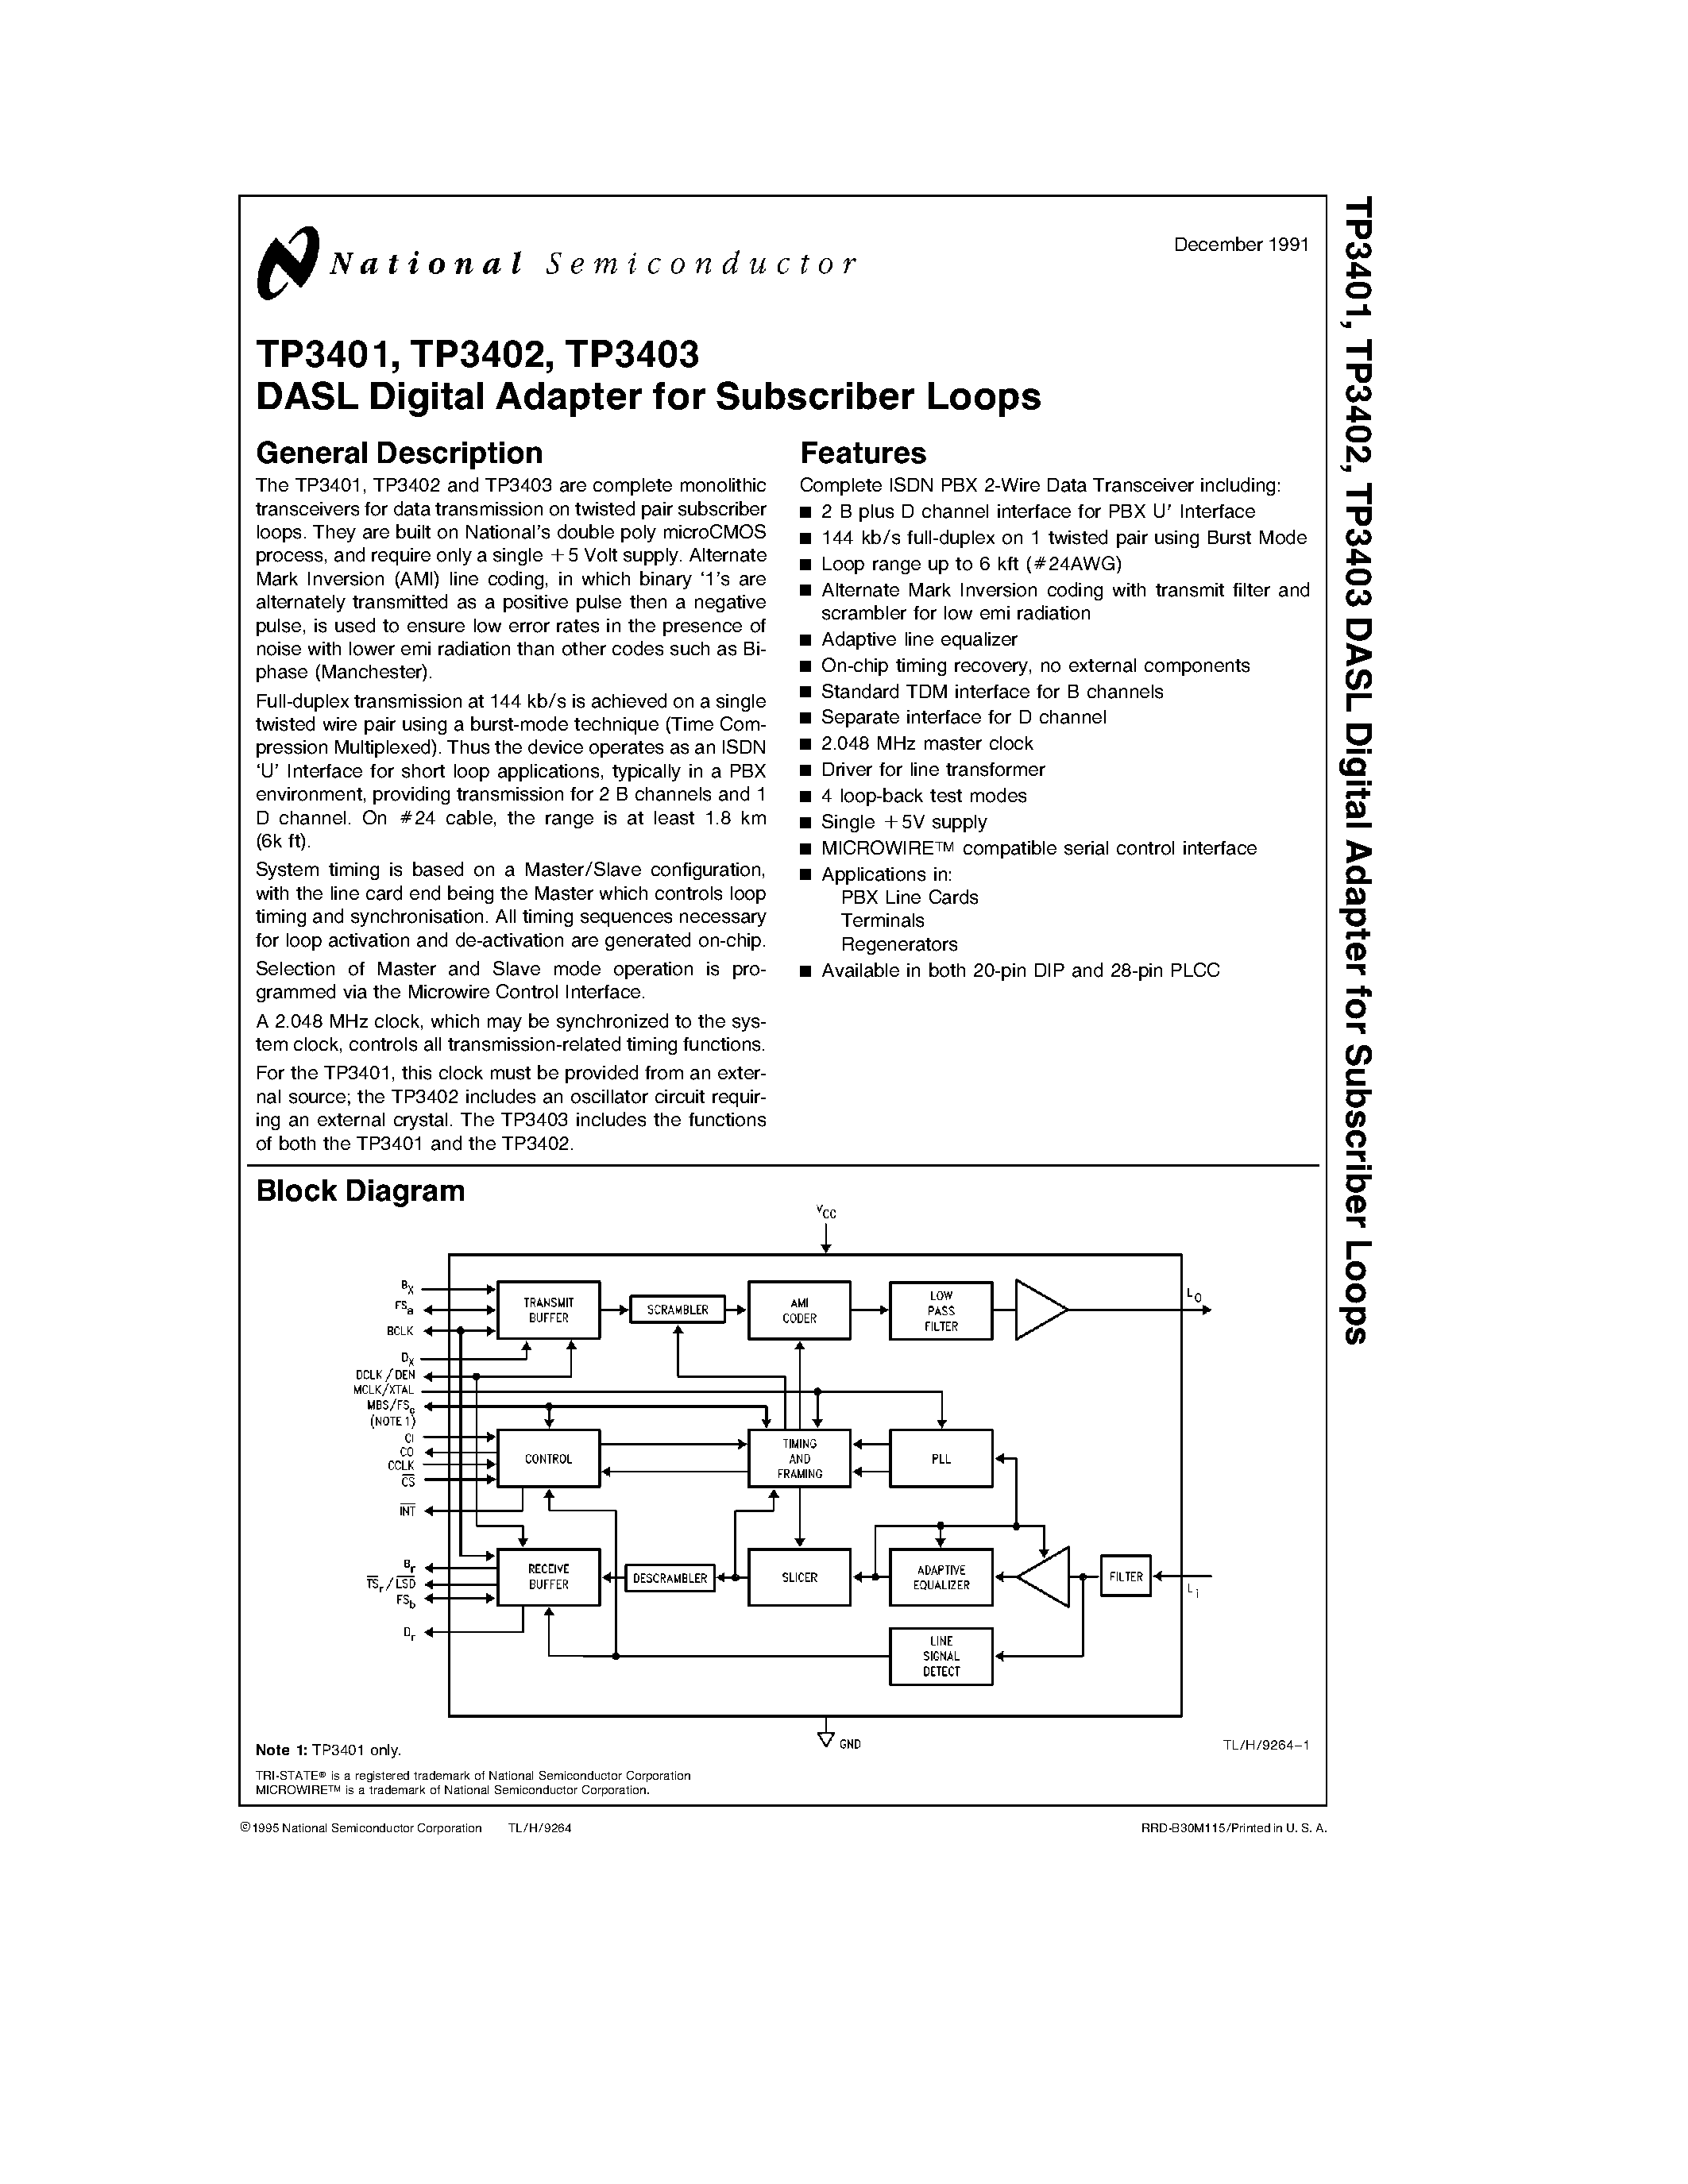 Даташит TP3403 - DASL Digital Adapter for Subscriber Loops страница 1